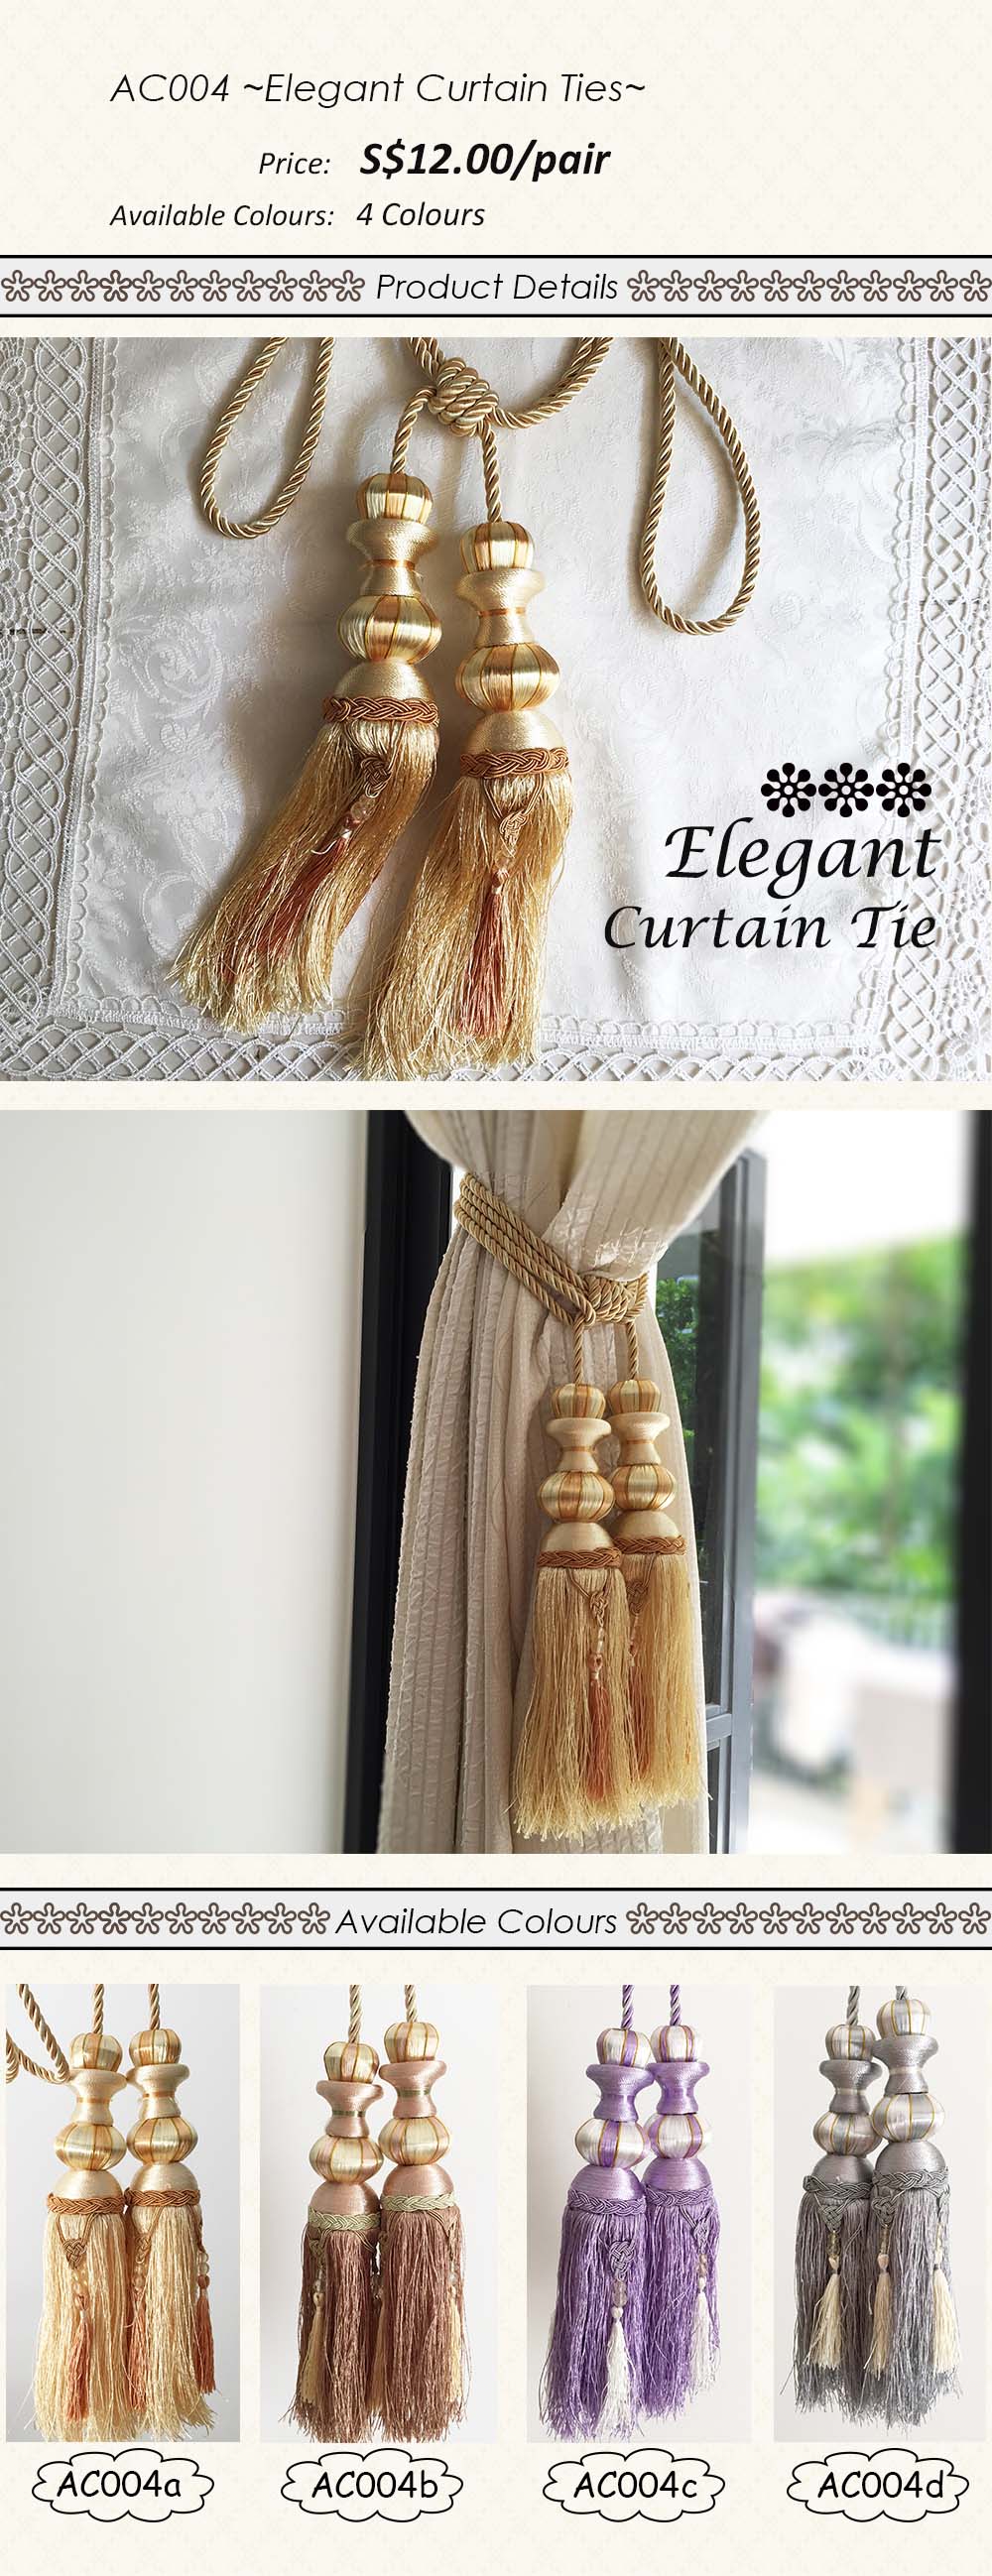 AC004 ~Elegant Curtain Ties~